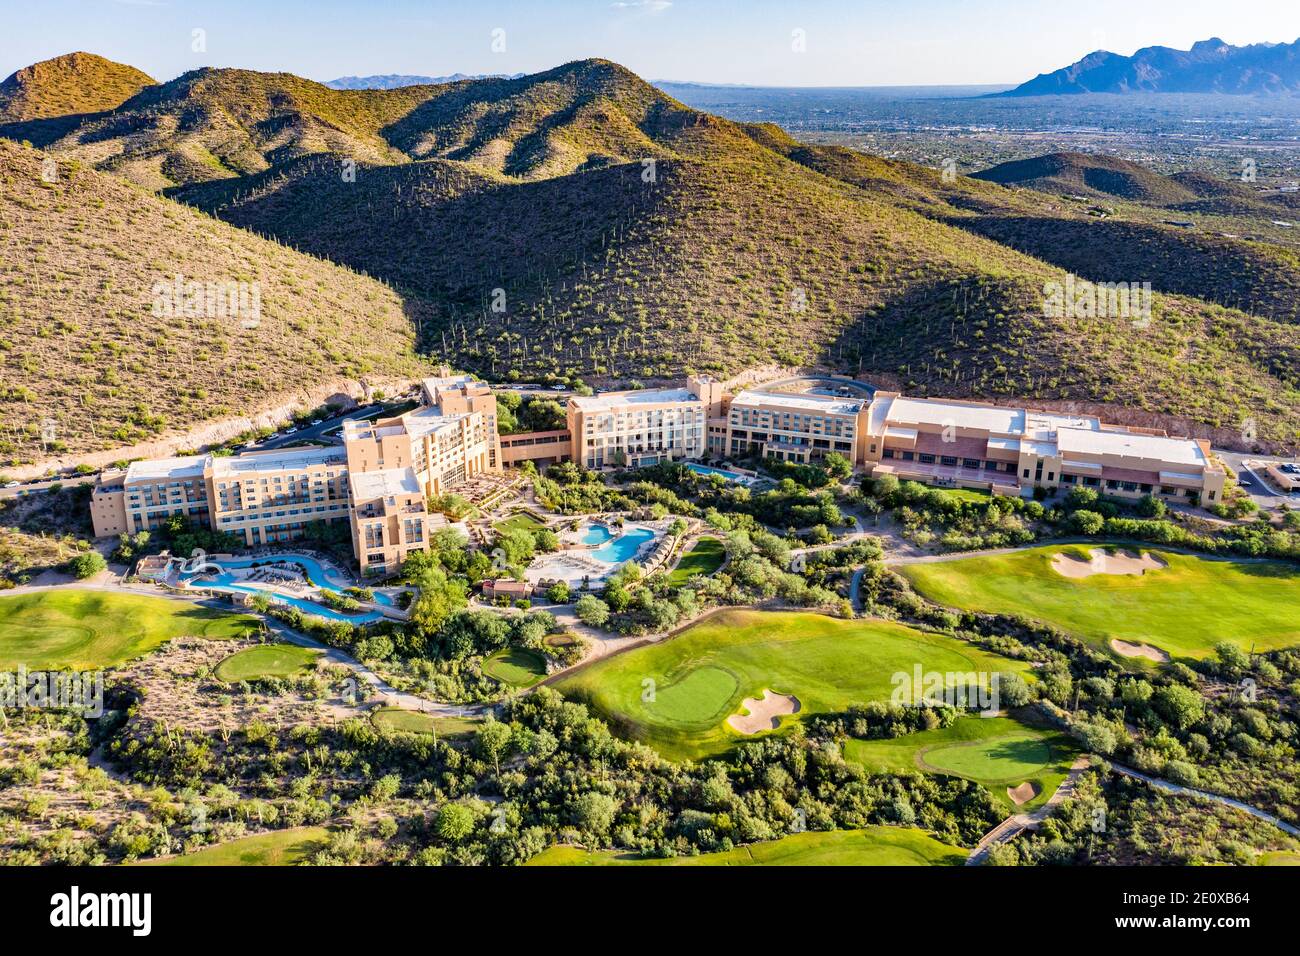 JW Marriott Starr Pass Resort Hotel, Tuscon, AZ, USA Stock Photo